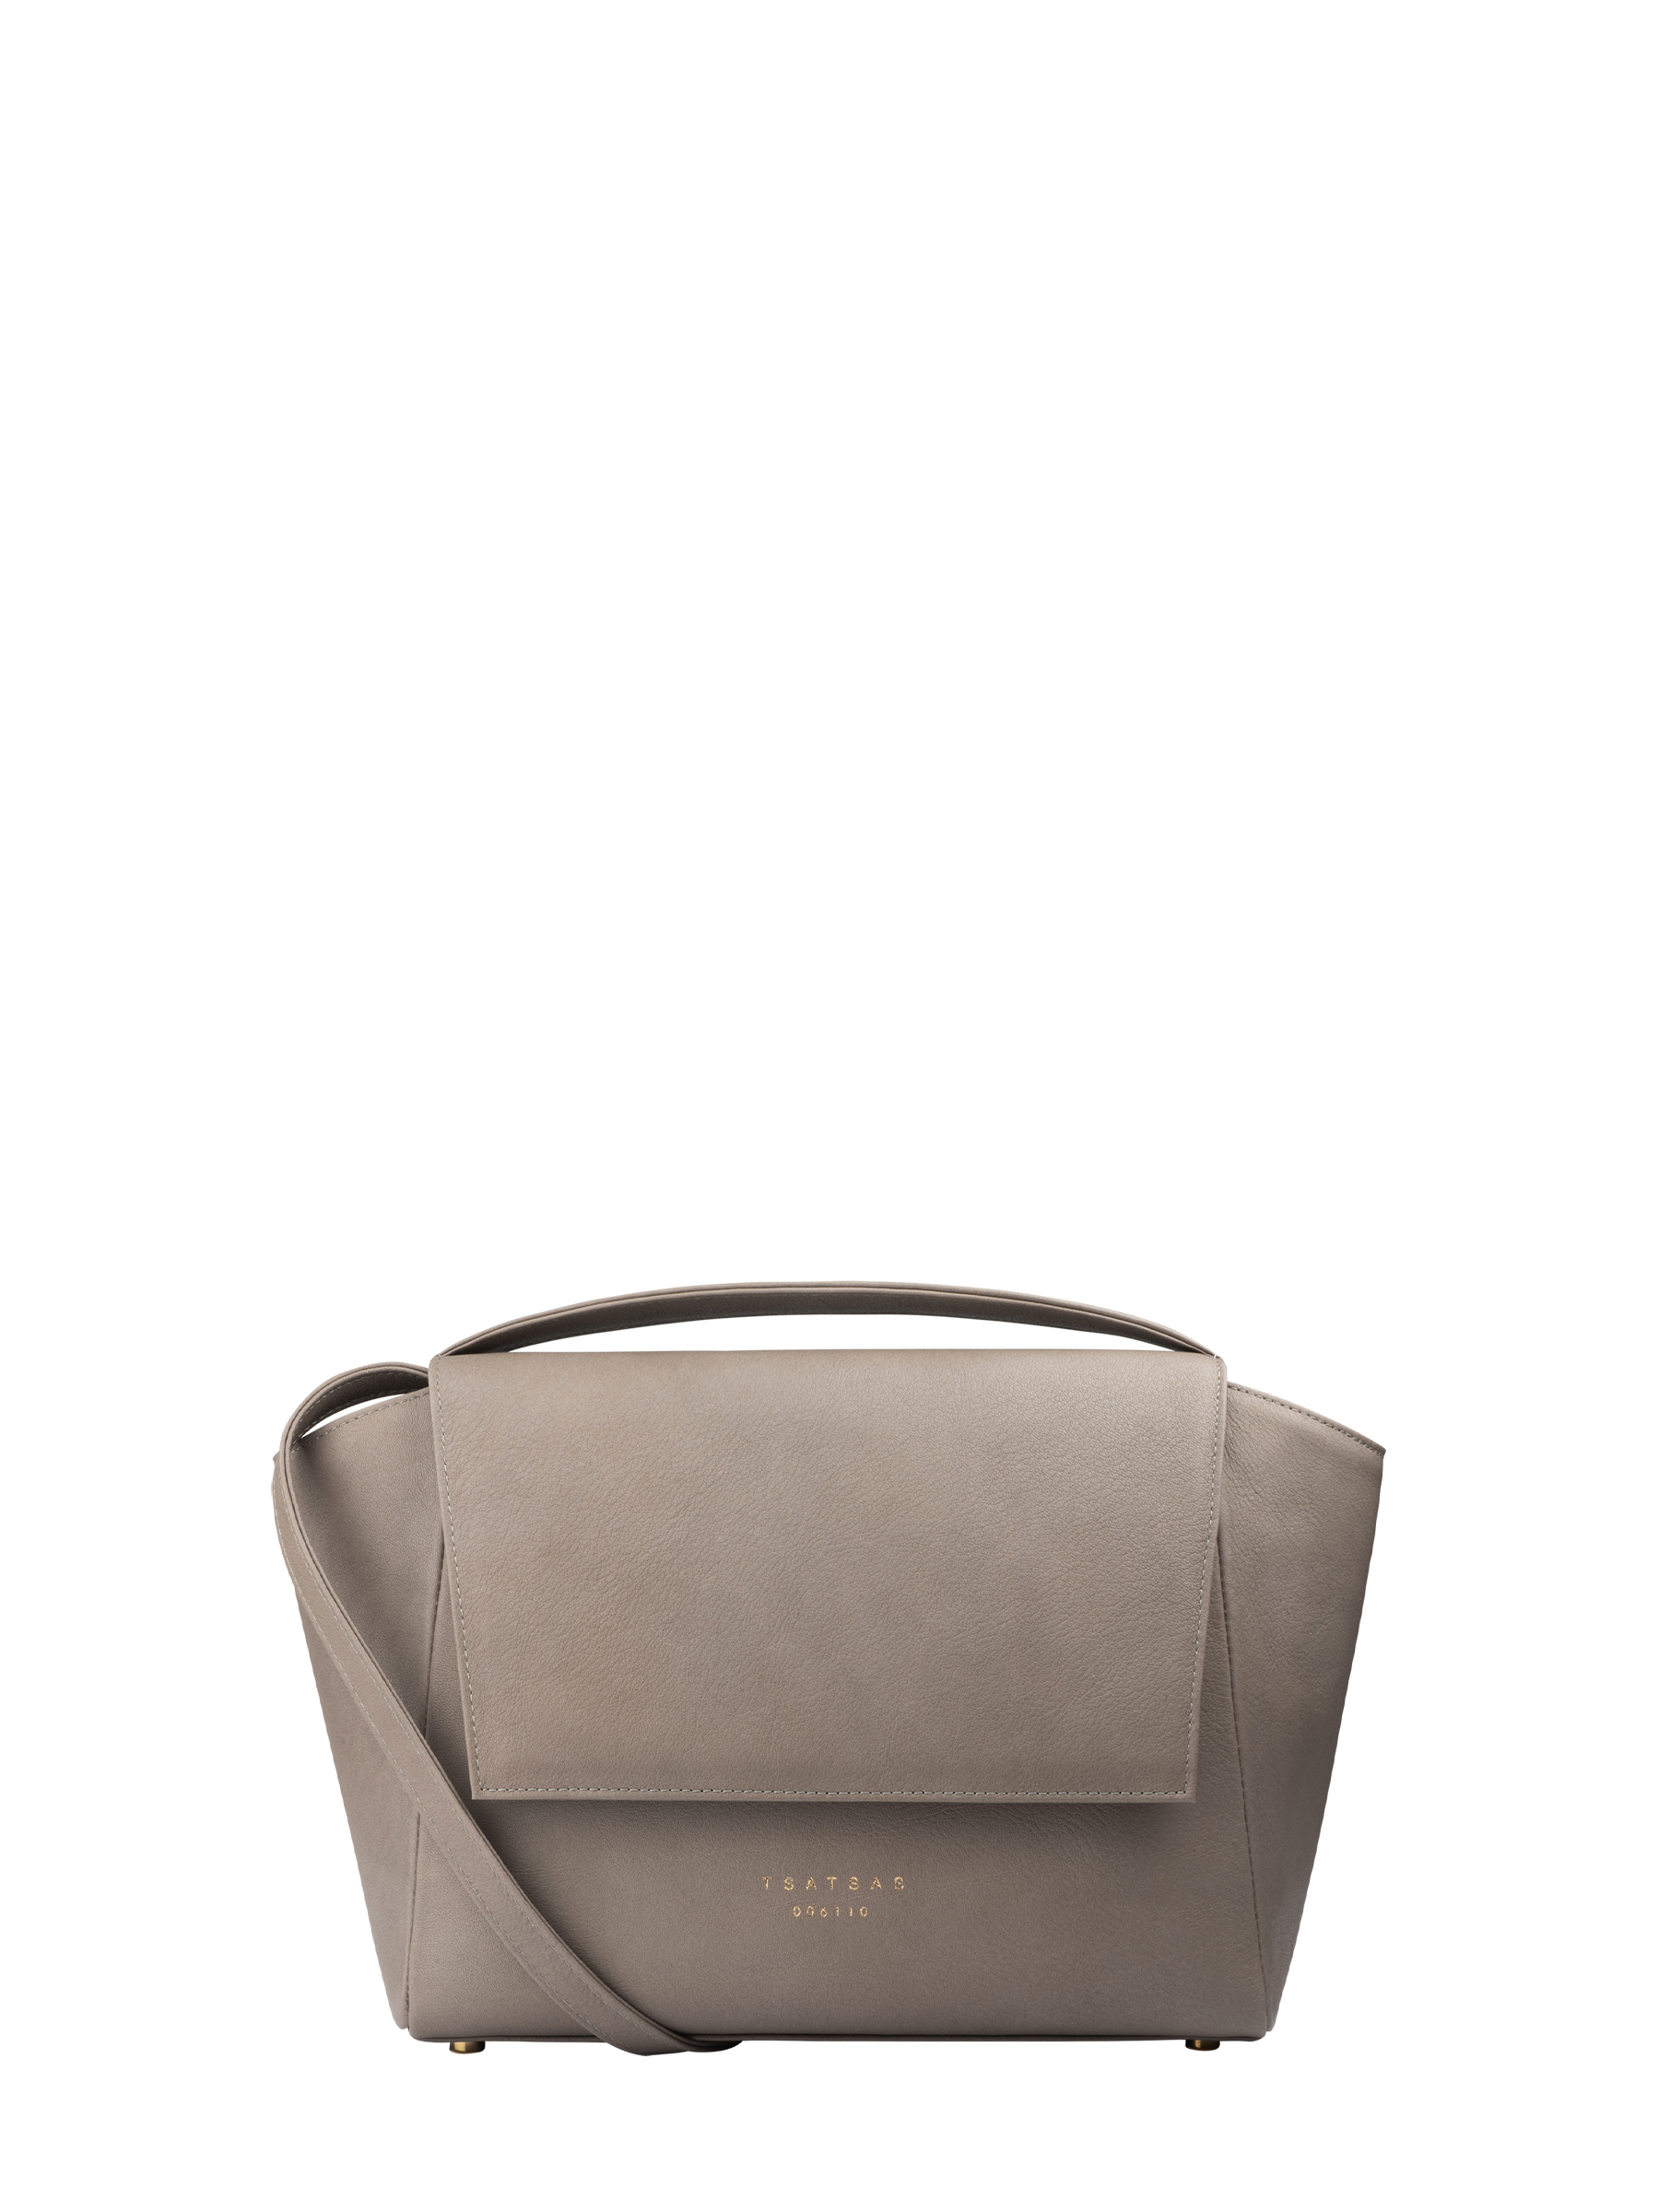 NEA 2 shoulder bag in grey calfskin leather | TSATSAS